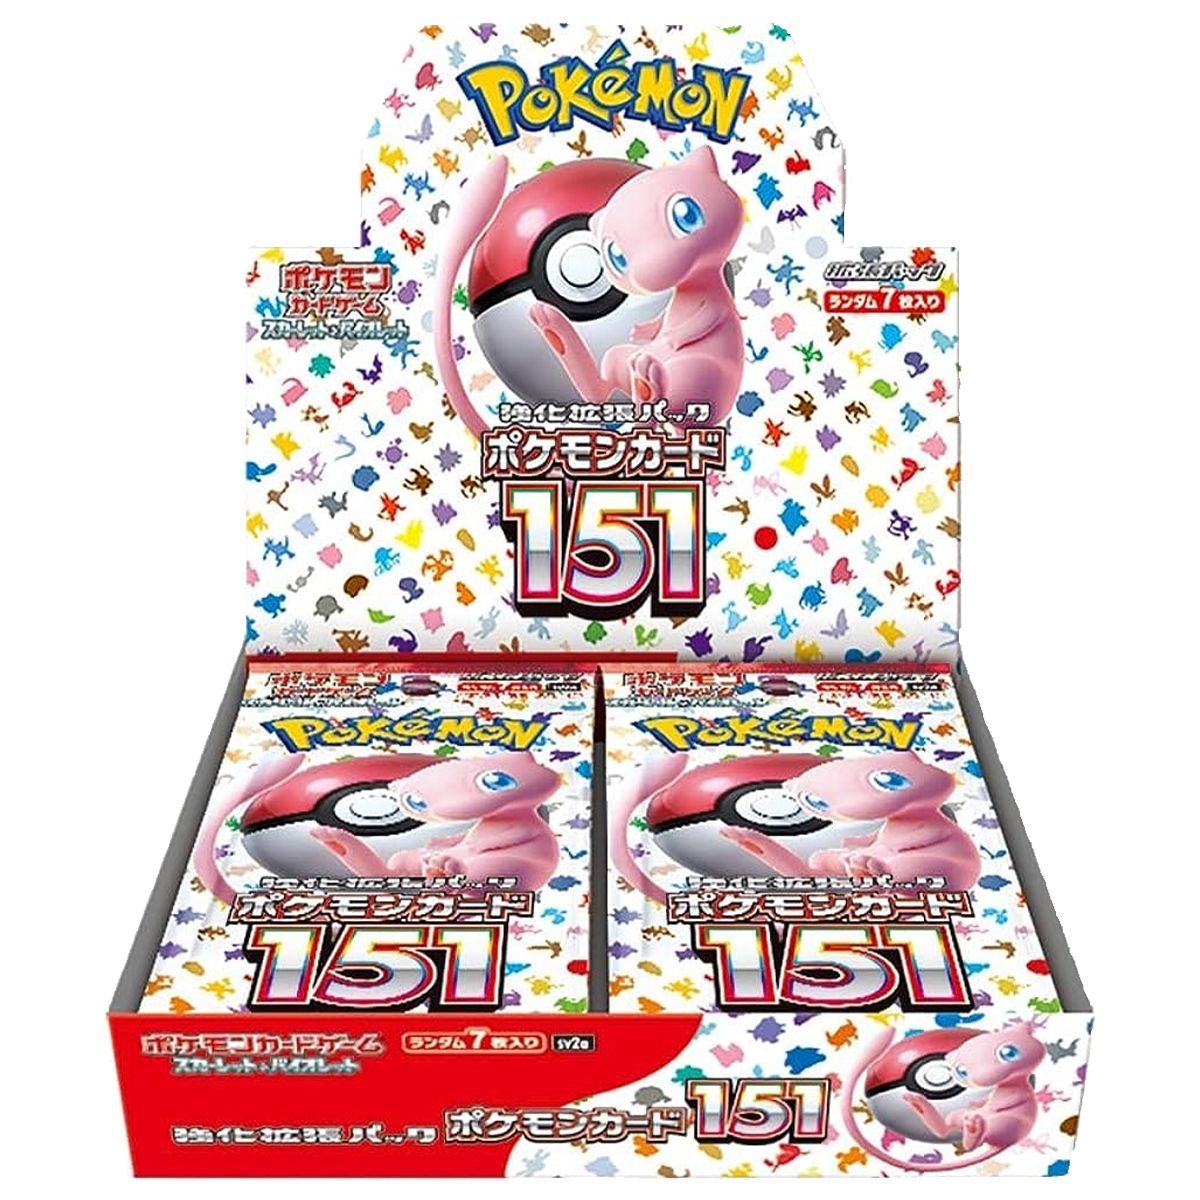 (Live) Pokemon Japanese 151 Booster Box